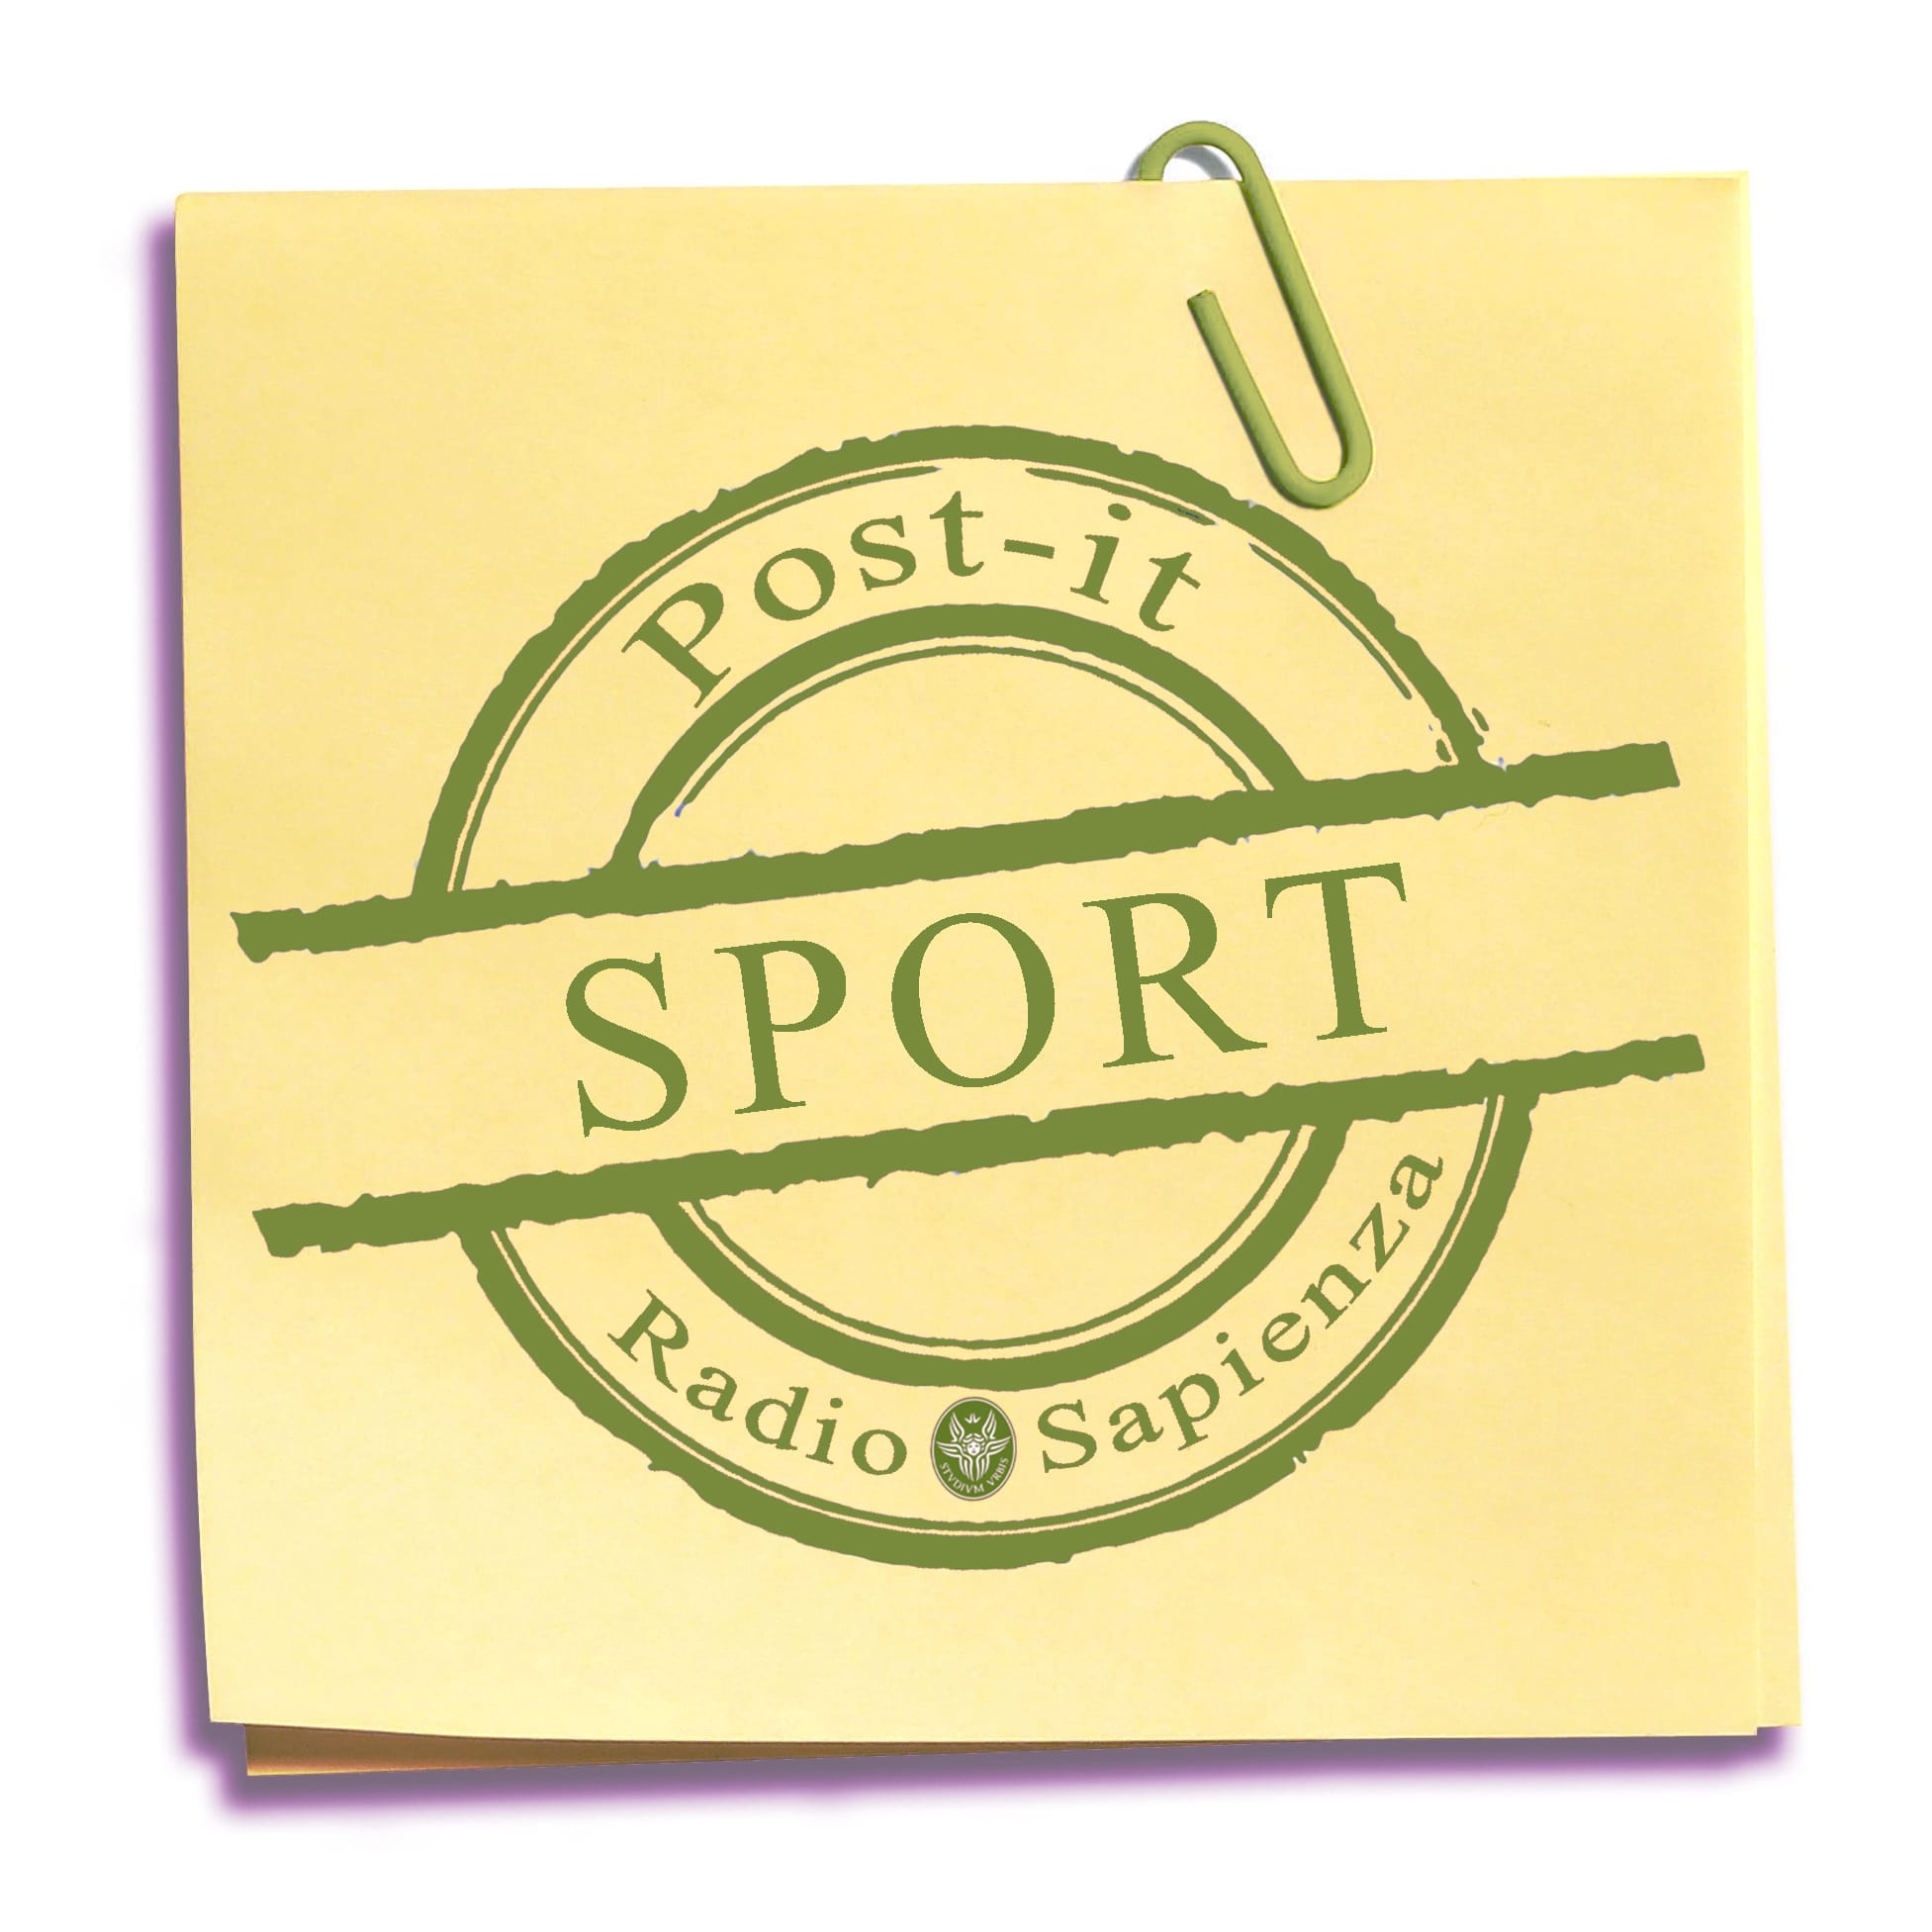 Post-it Sport – Giovedì 18 novembre